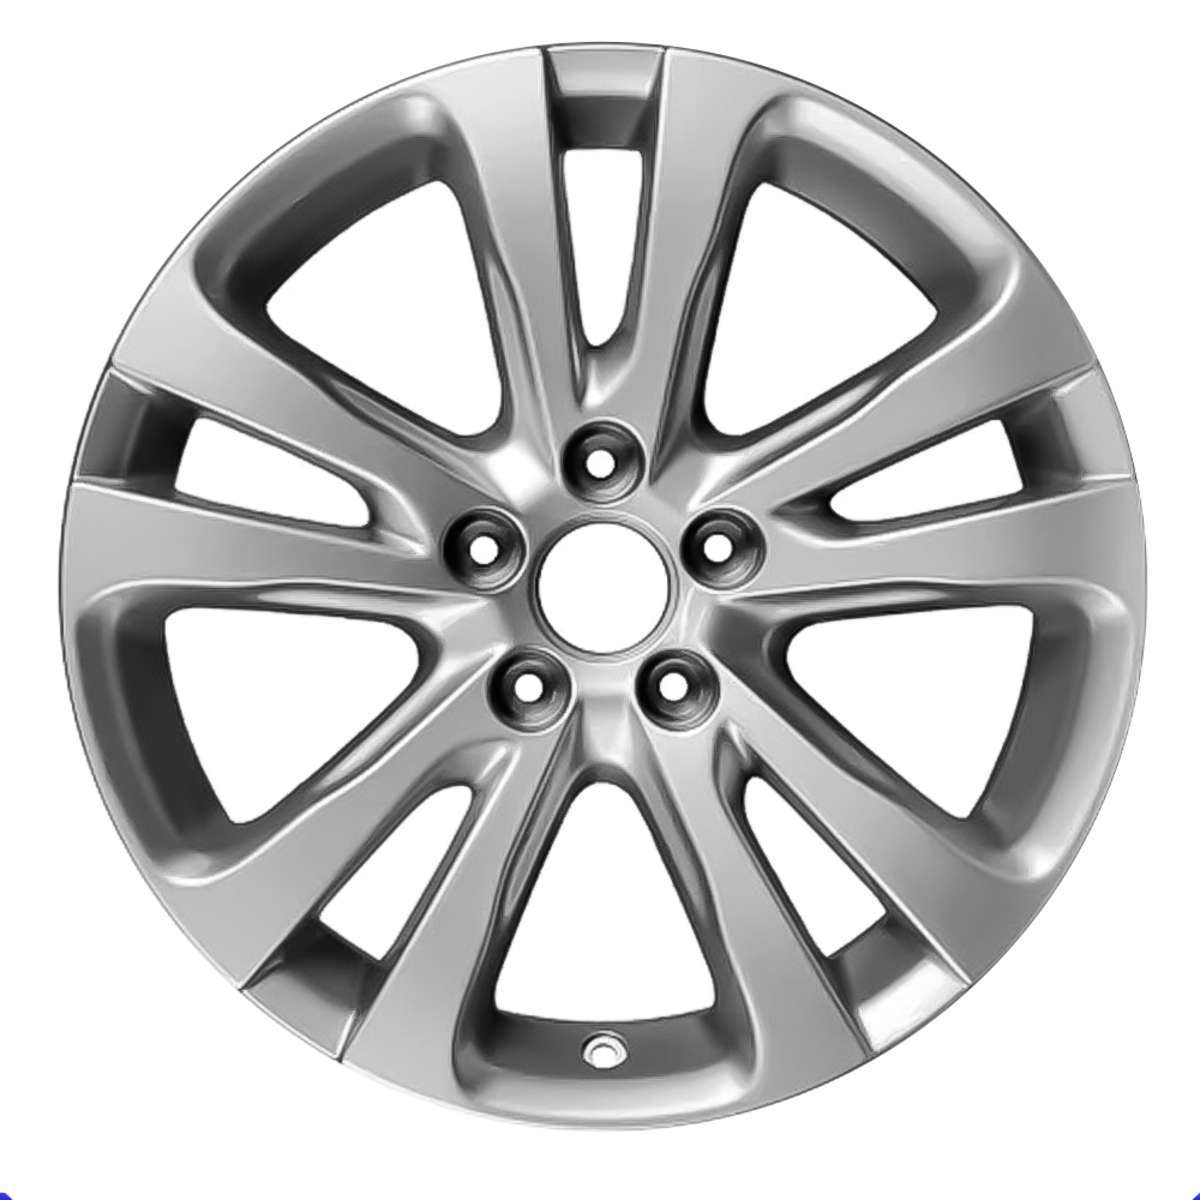 2016 Chrysler 200 New 17" Replacement Wheel Rim RW2511S